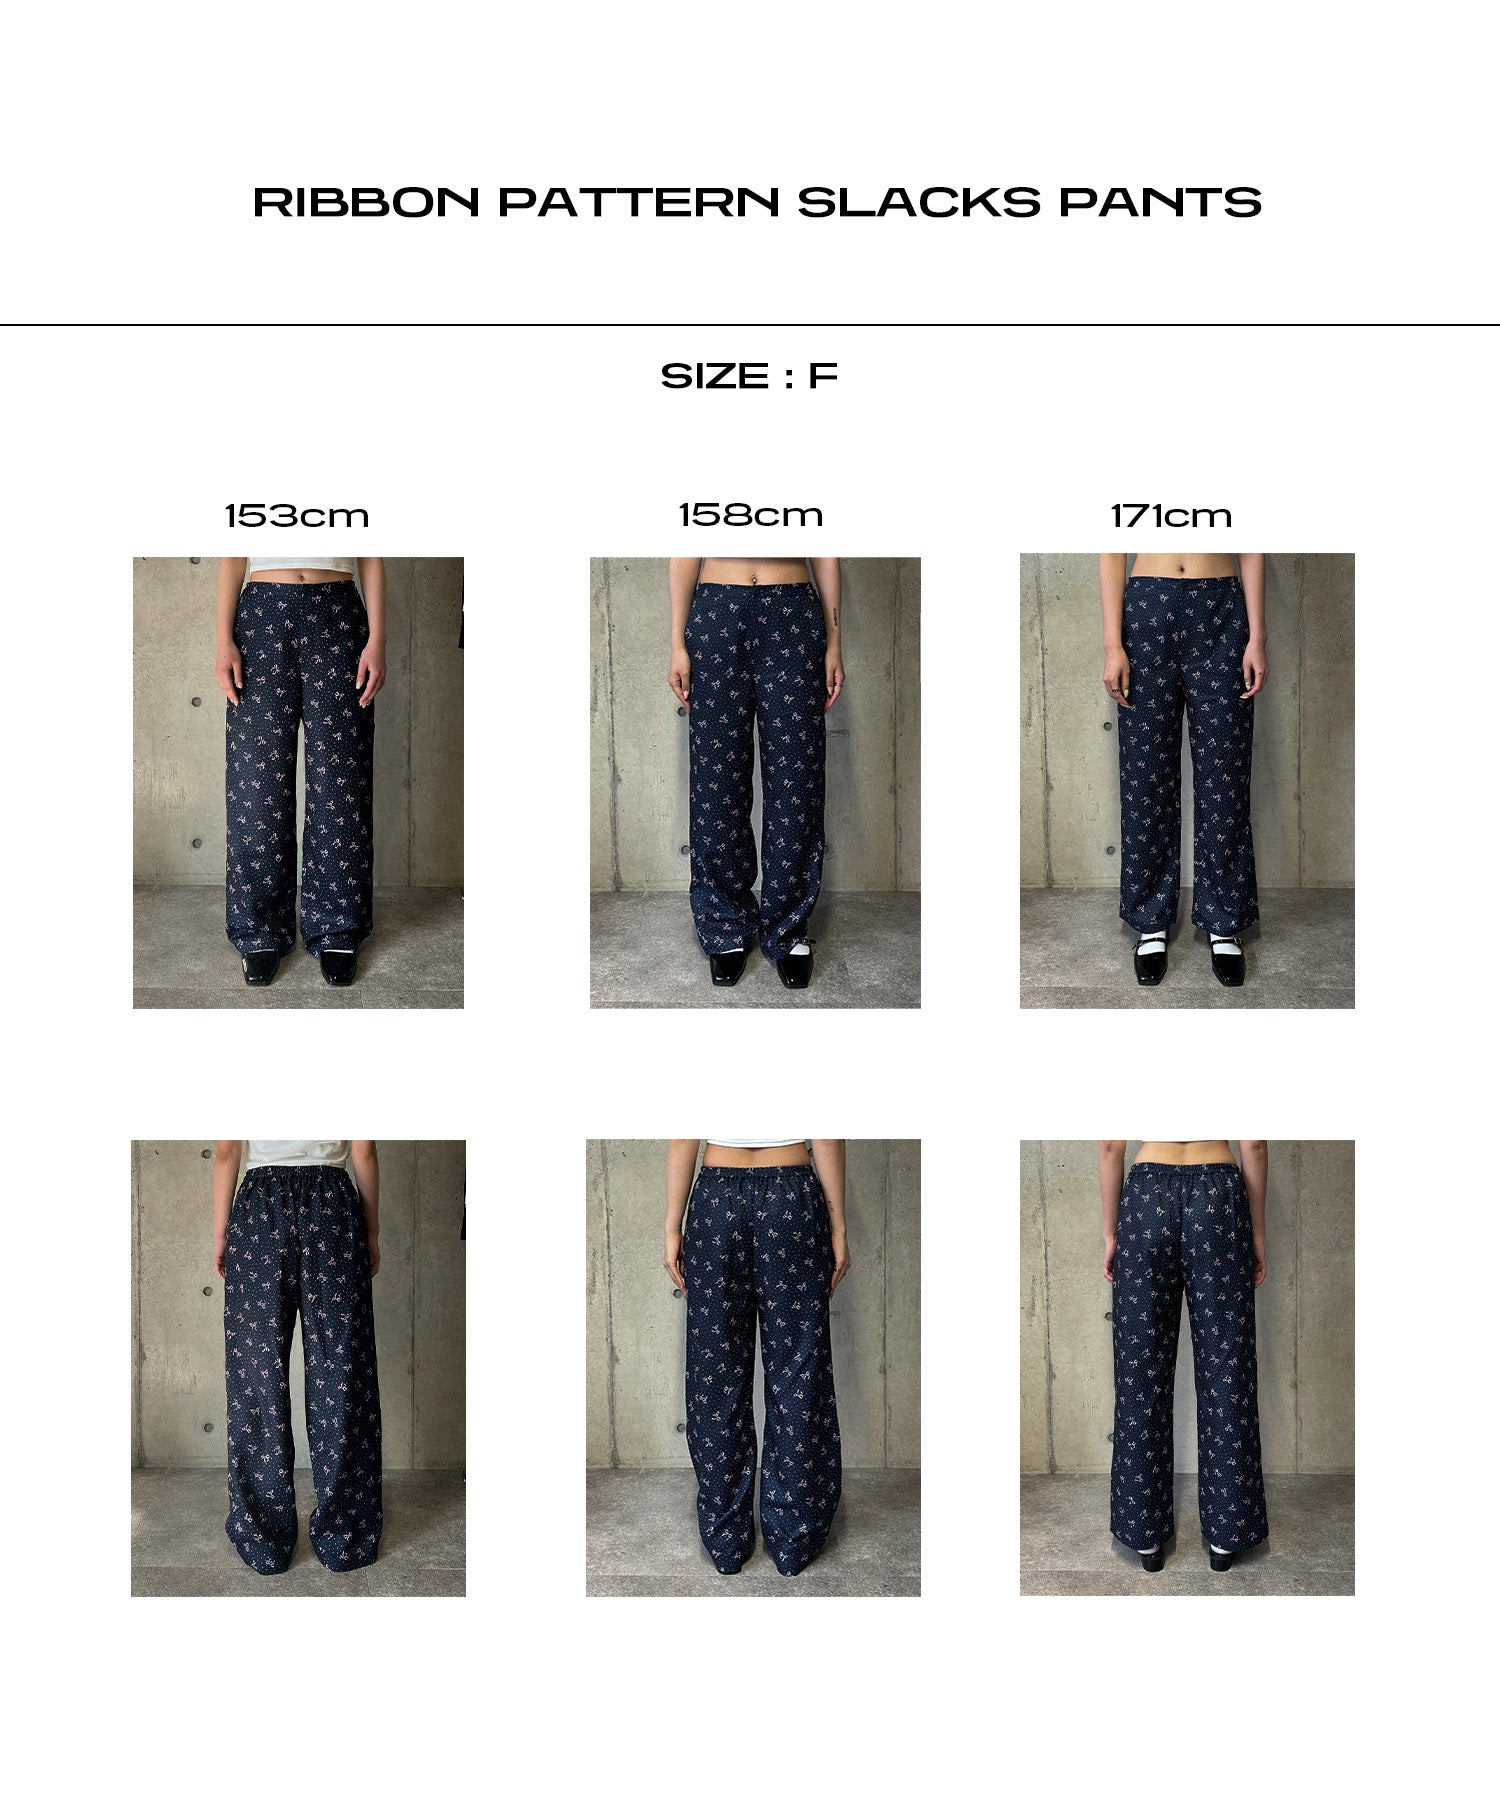 Ribbon pattern slacks pants